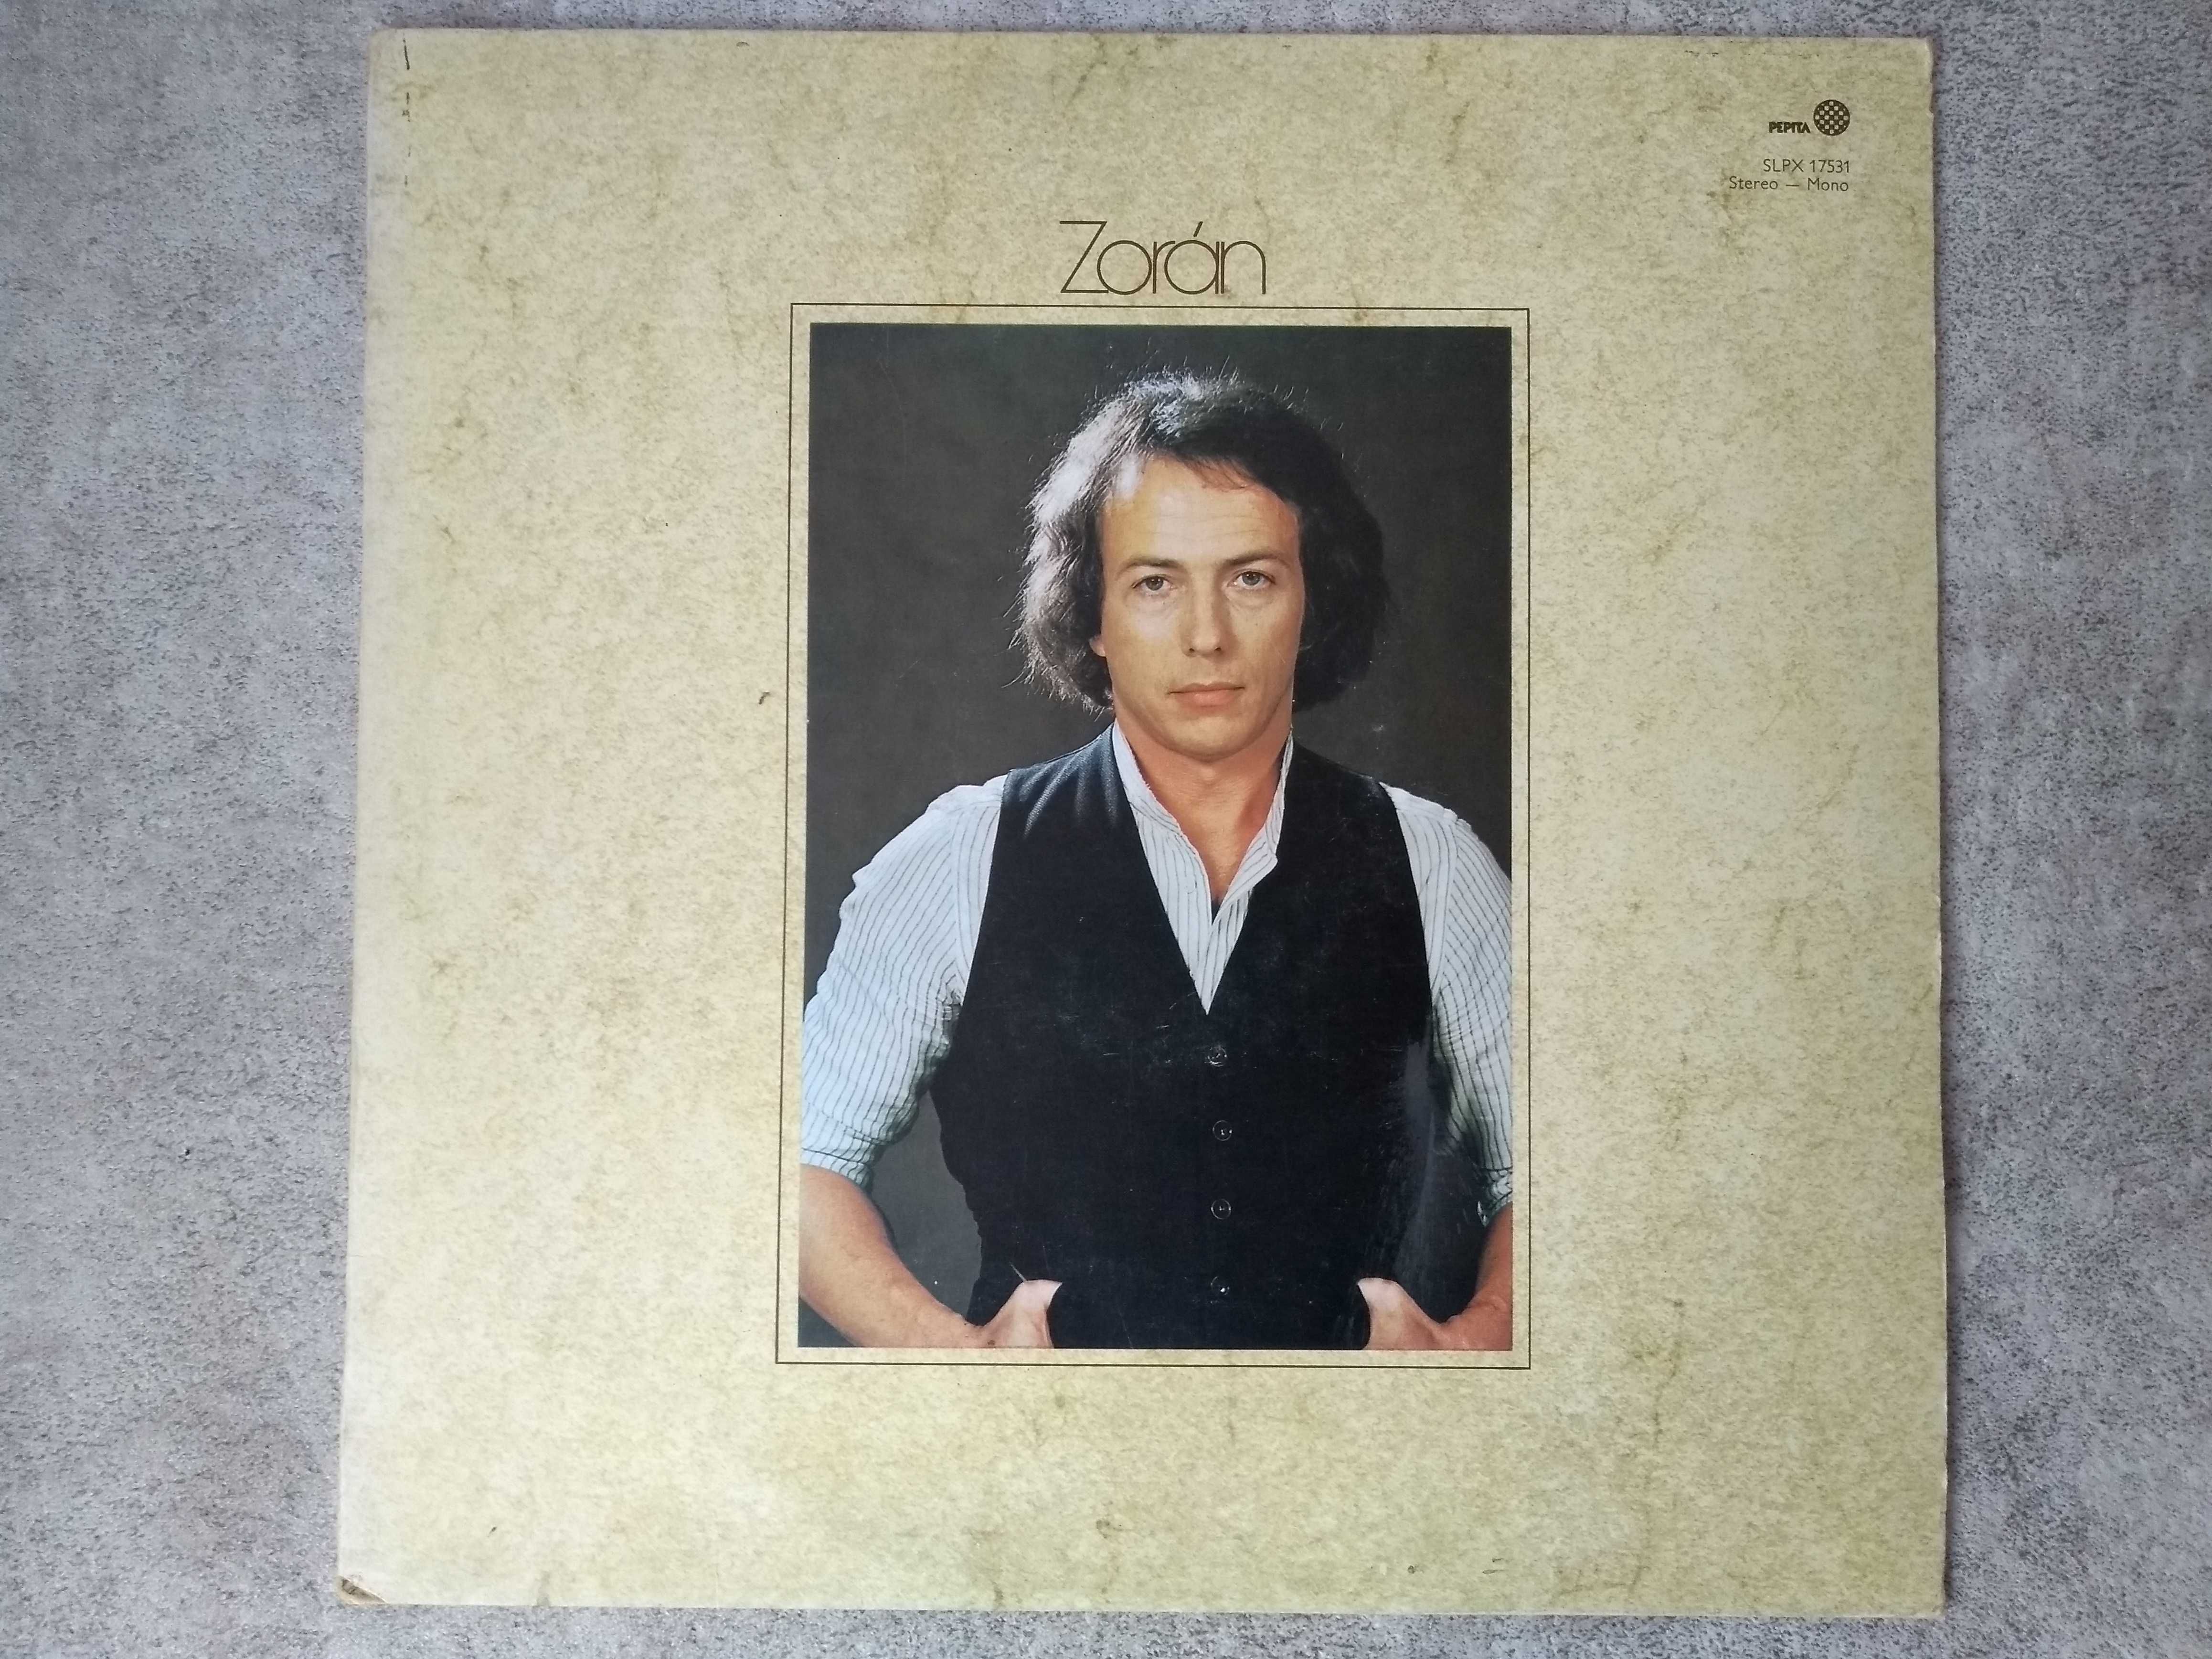 Zorán Sztevanovity - Zoran - LP - płyta gramofonowa, winyl - 1977